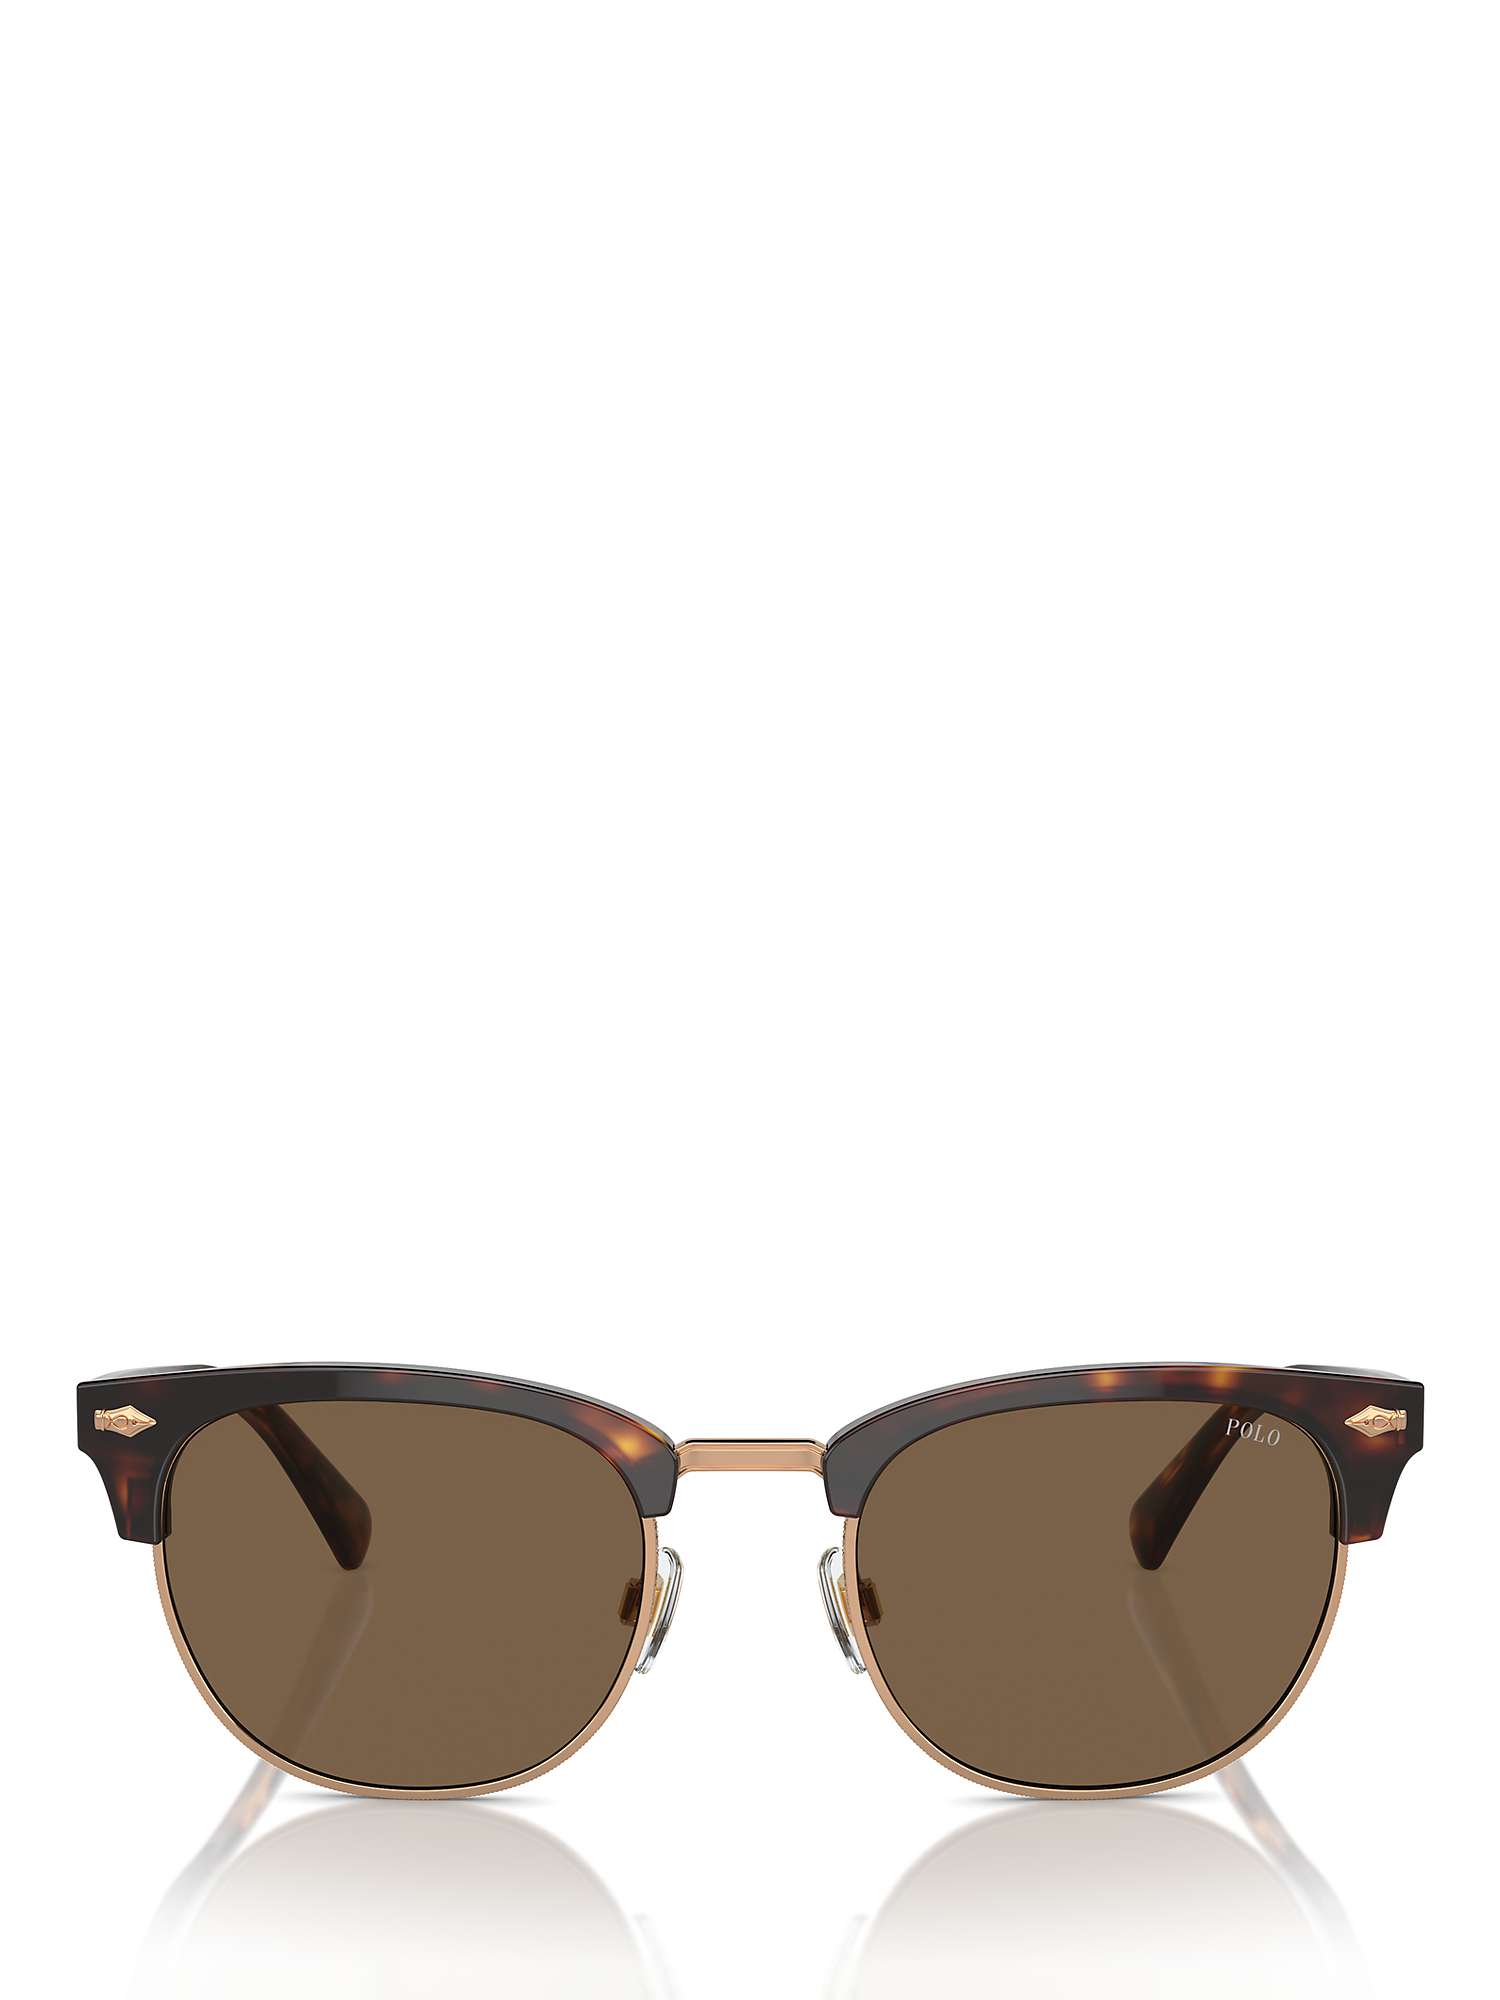 Buy Polo Ralph Lauren PH4217 Men's Oval Sunglasses Online at johnlewis.com